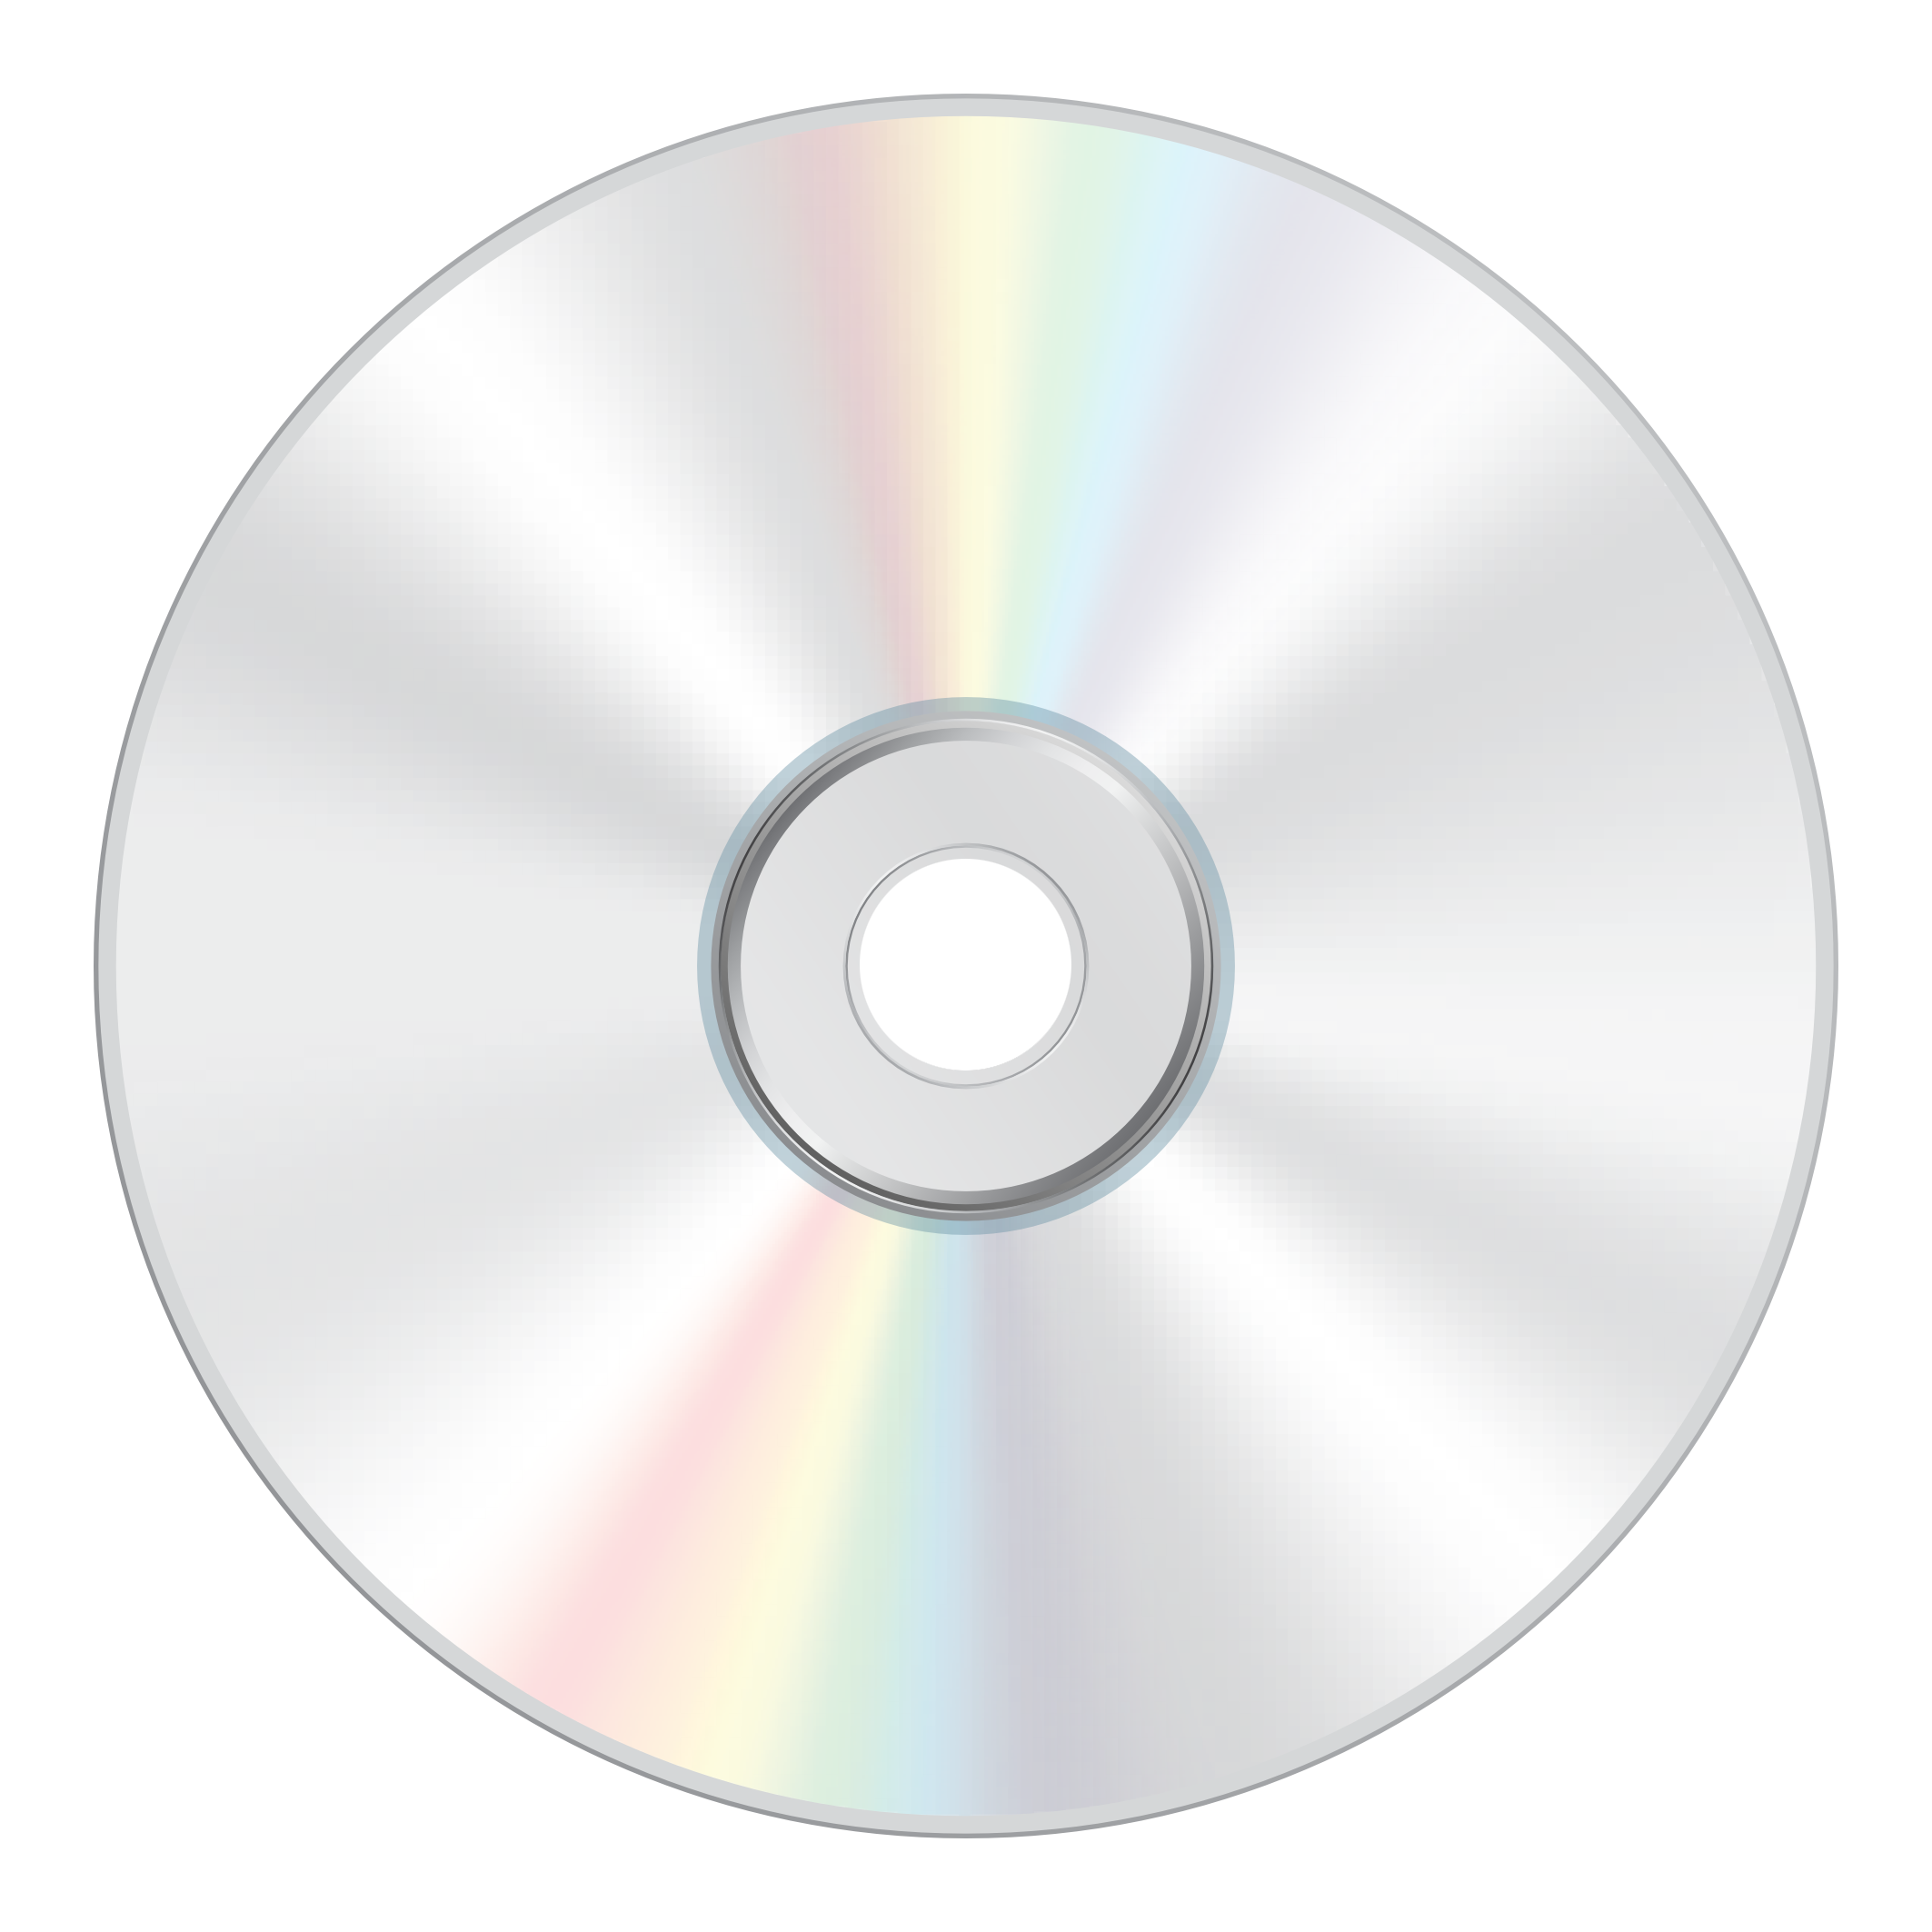 CD Disk Vector PNG Image - PngPix